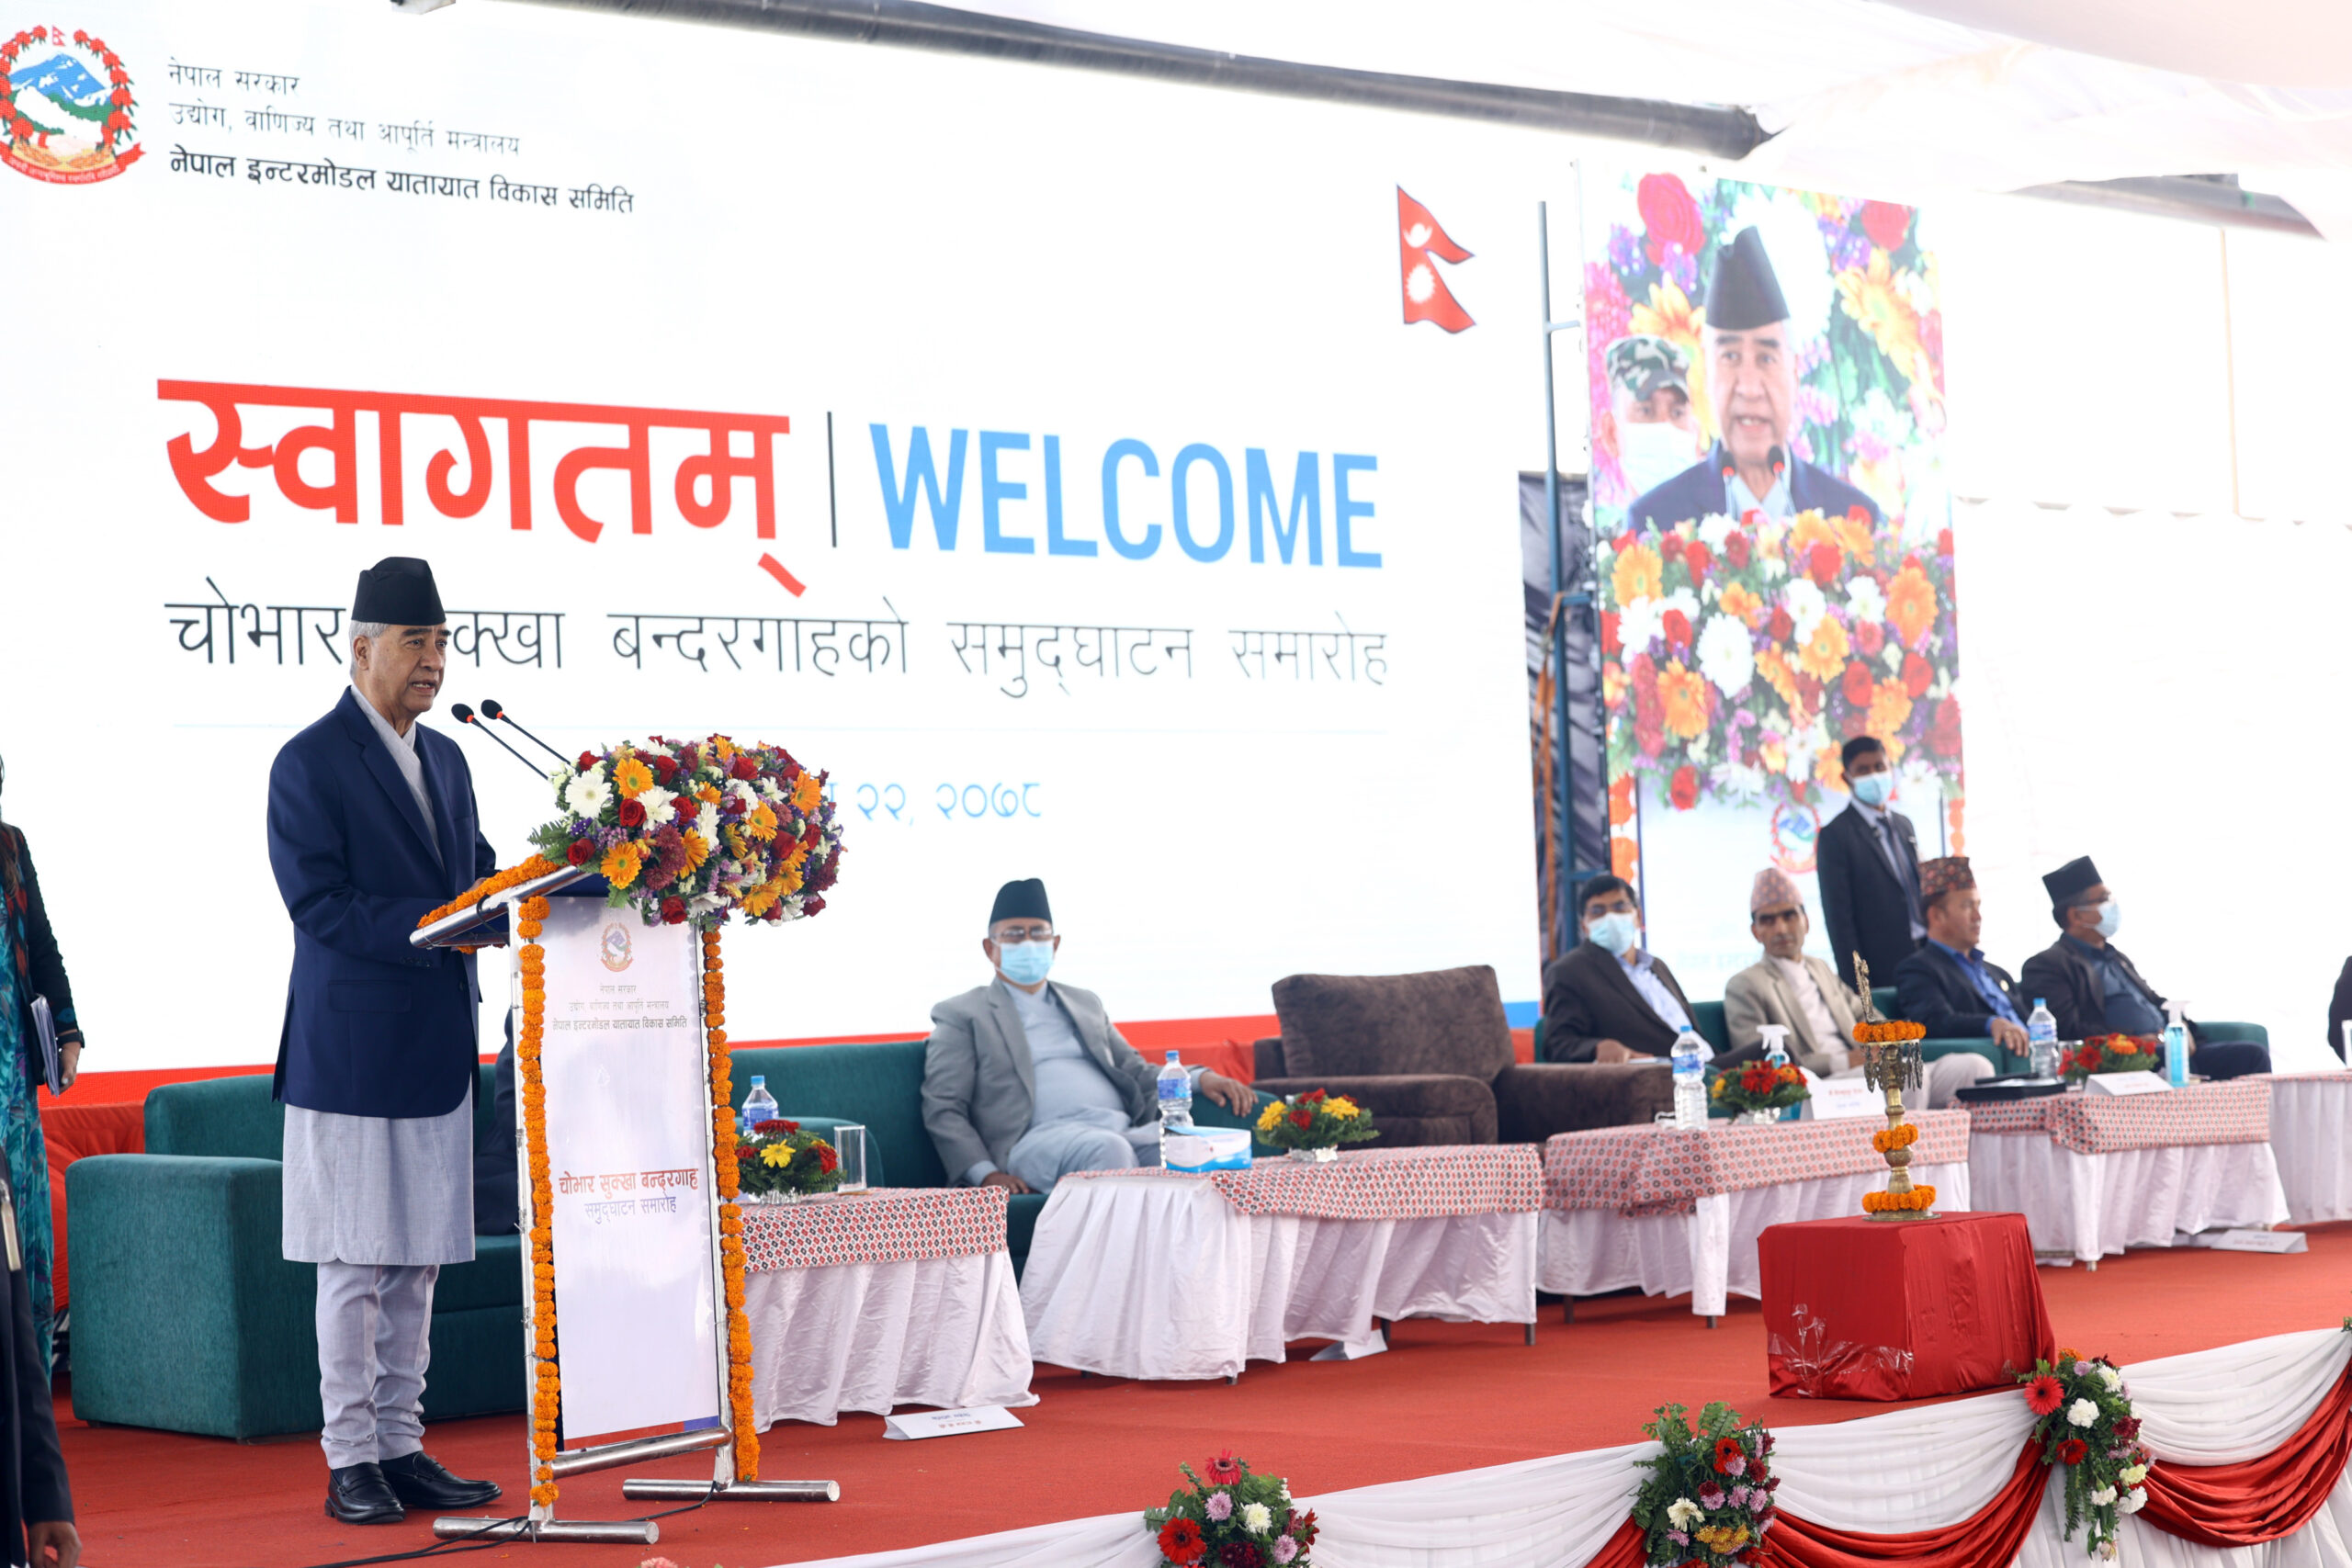 PM Deuba inaugurates Nepal’s first-ever Chobhar dry port